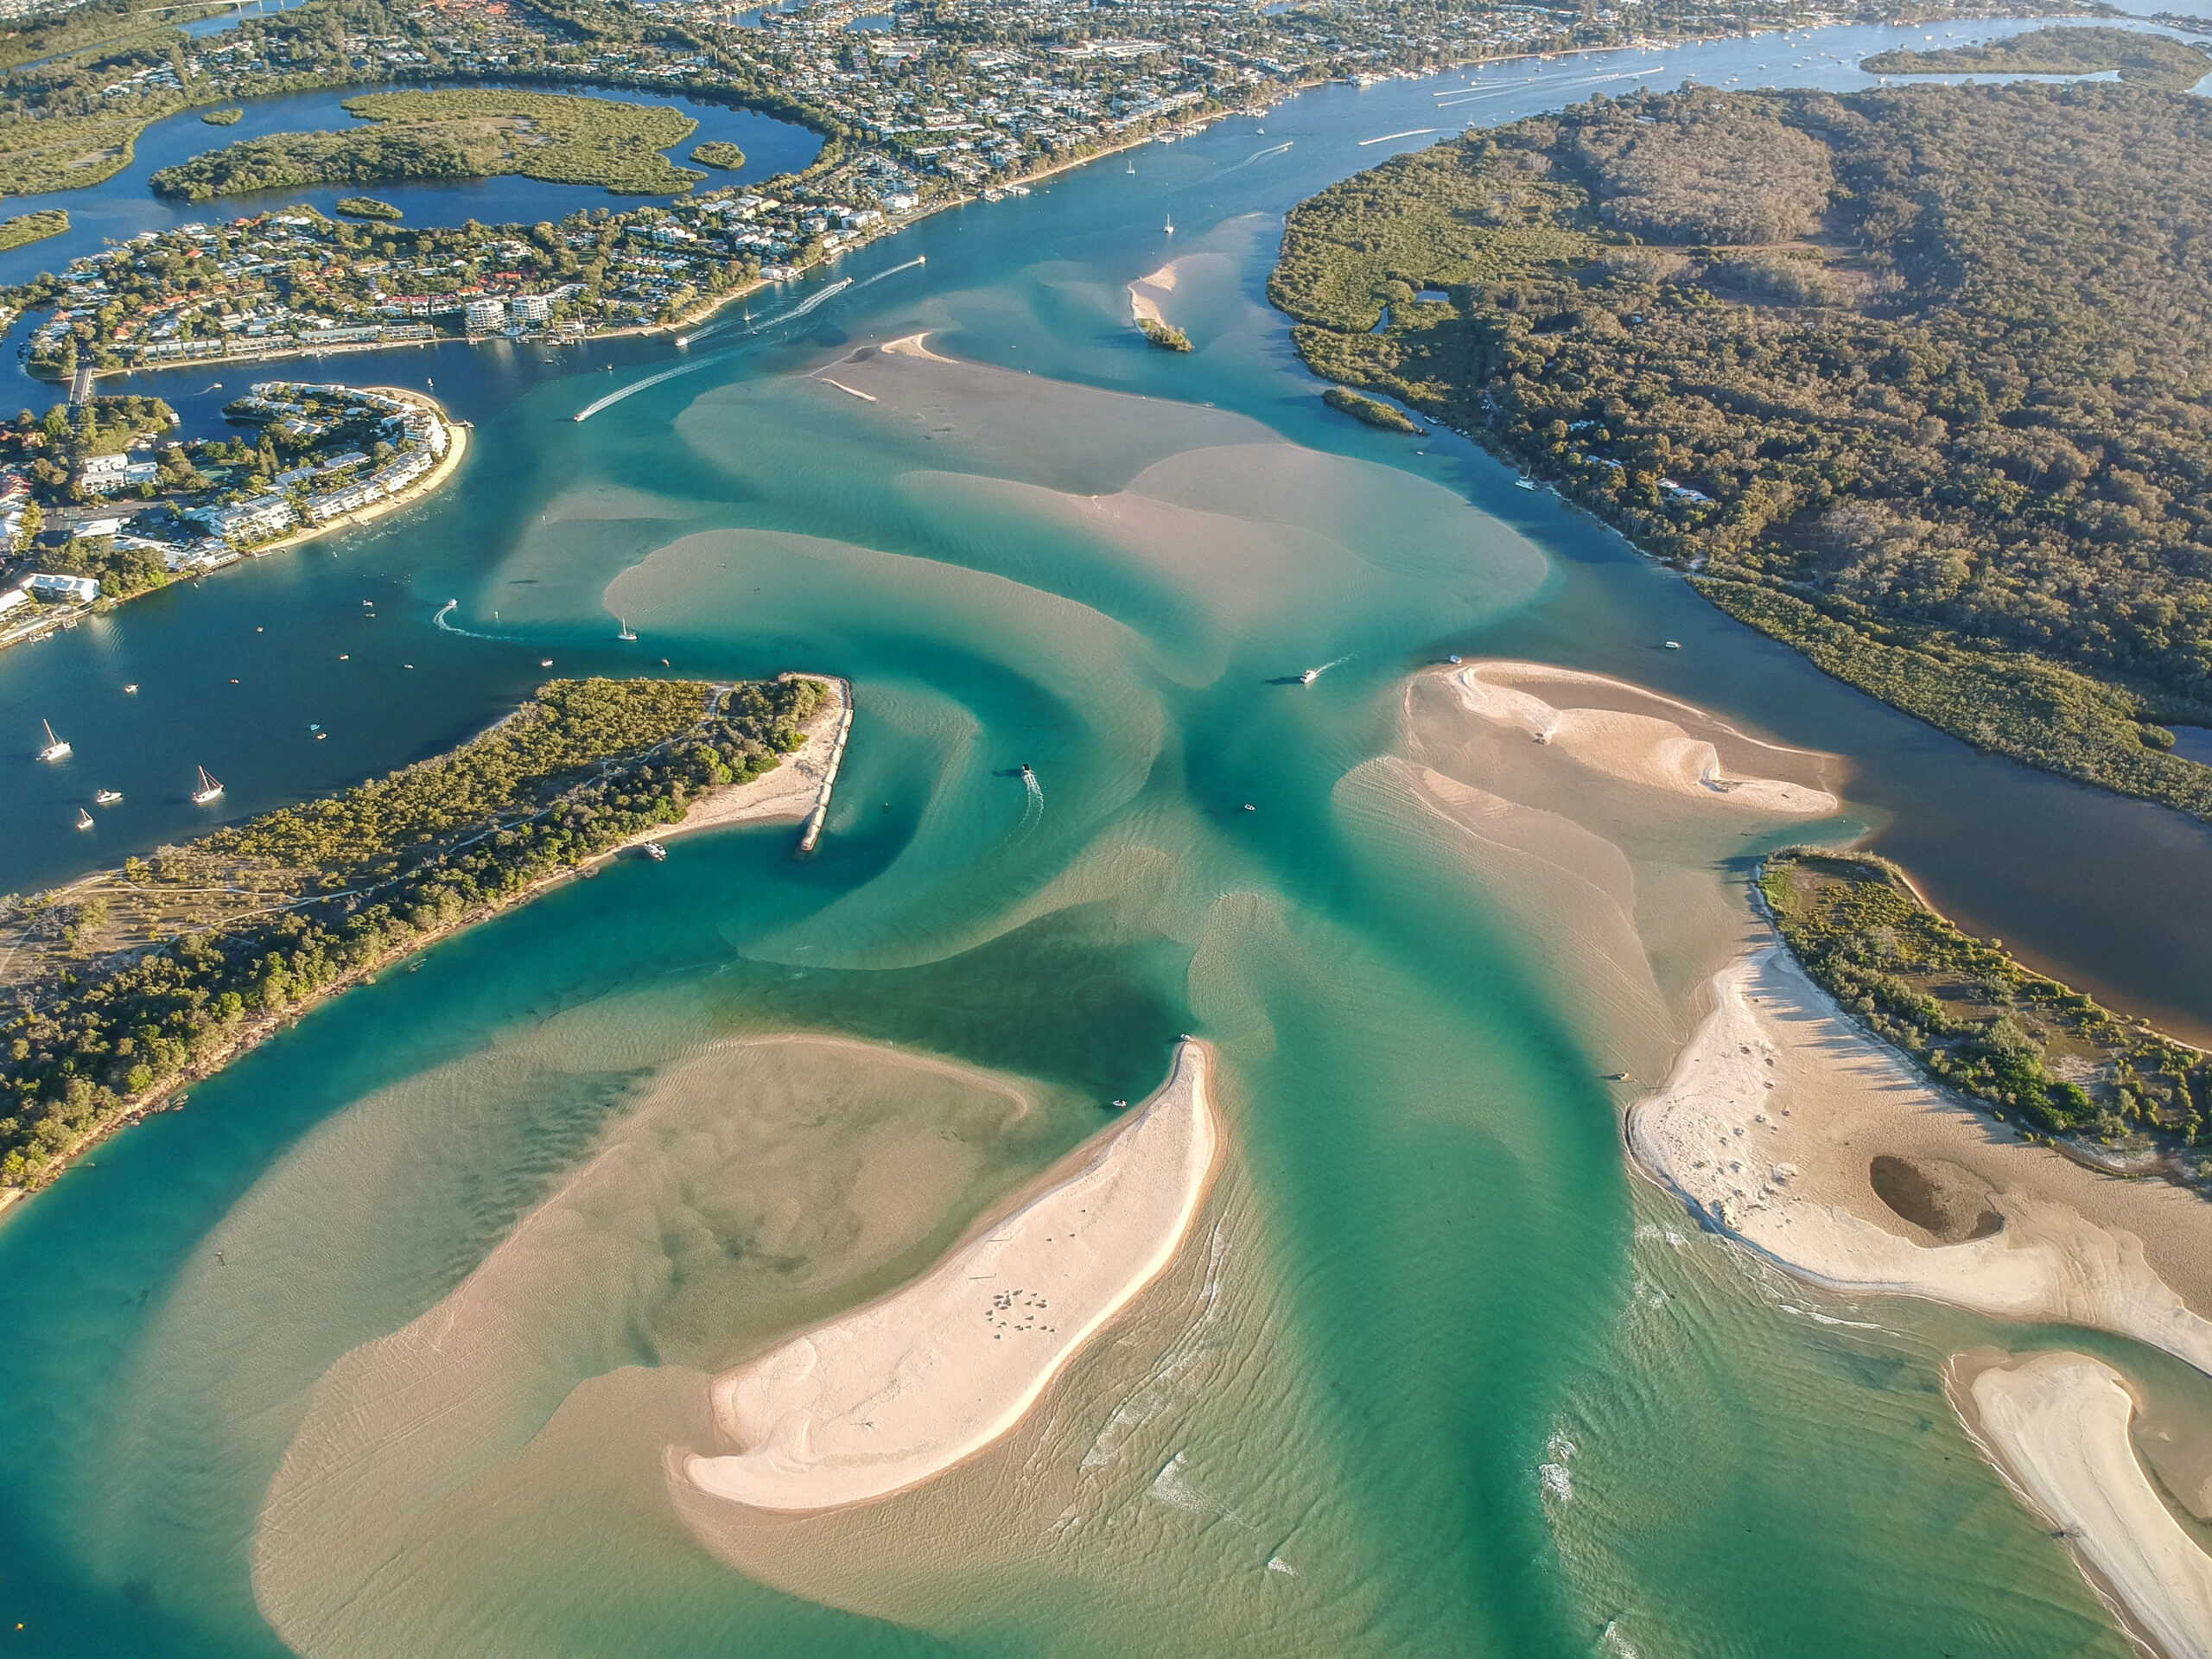 Noosa river, Australia on East Coast Australia tours